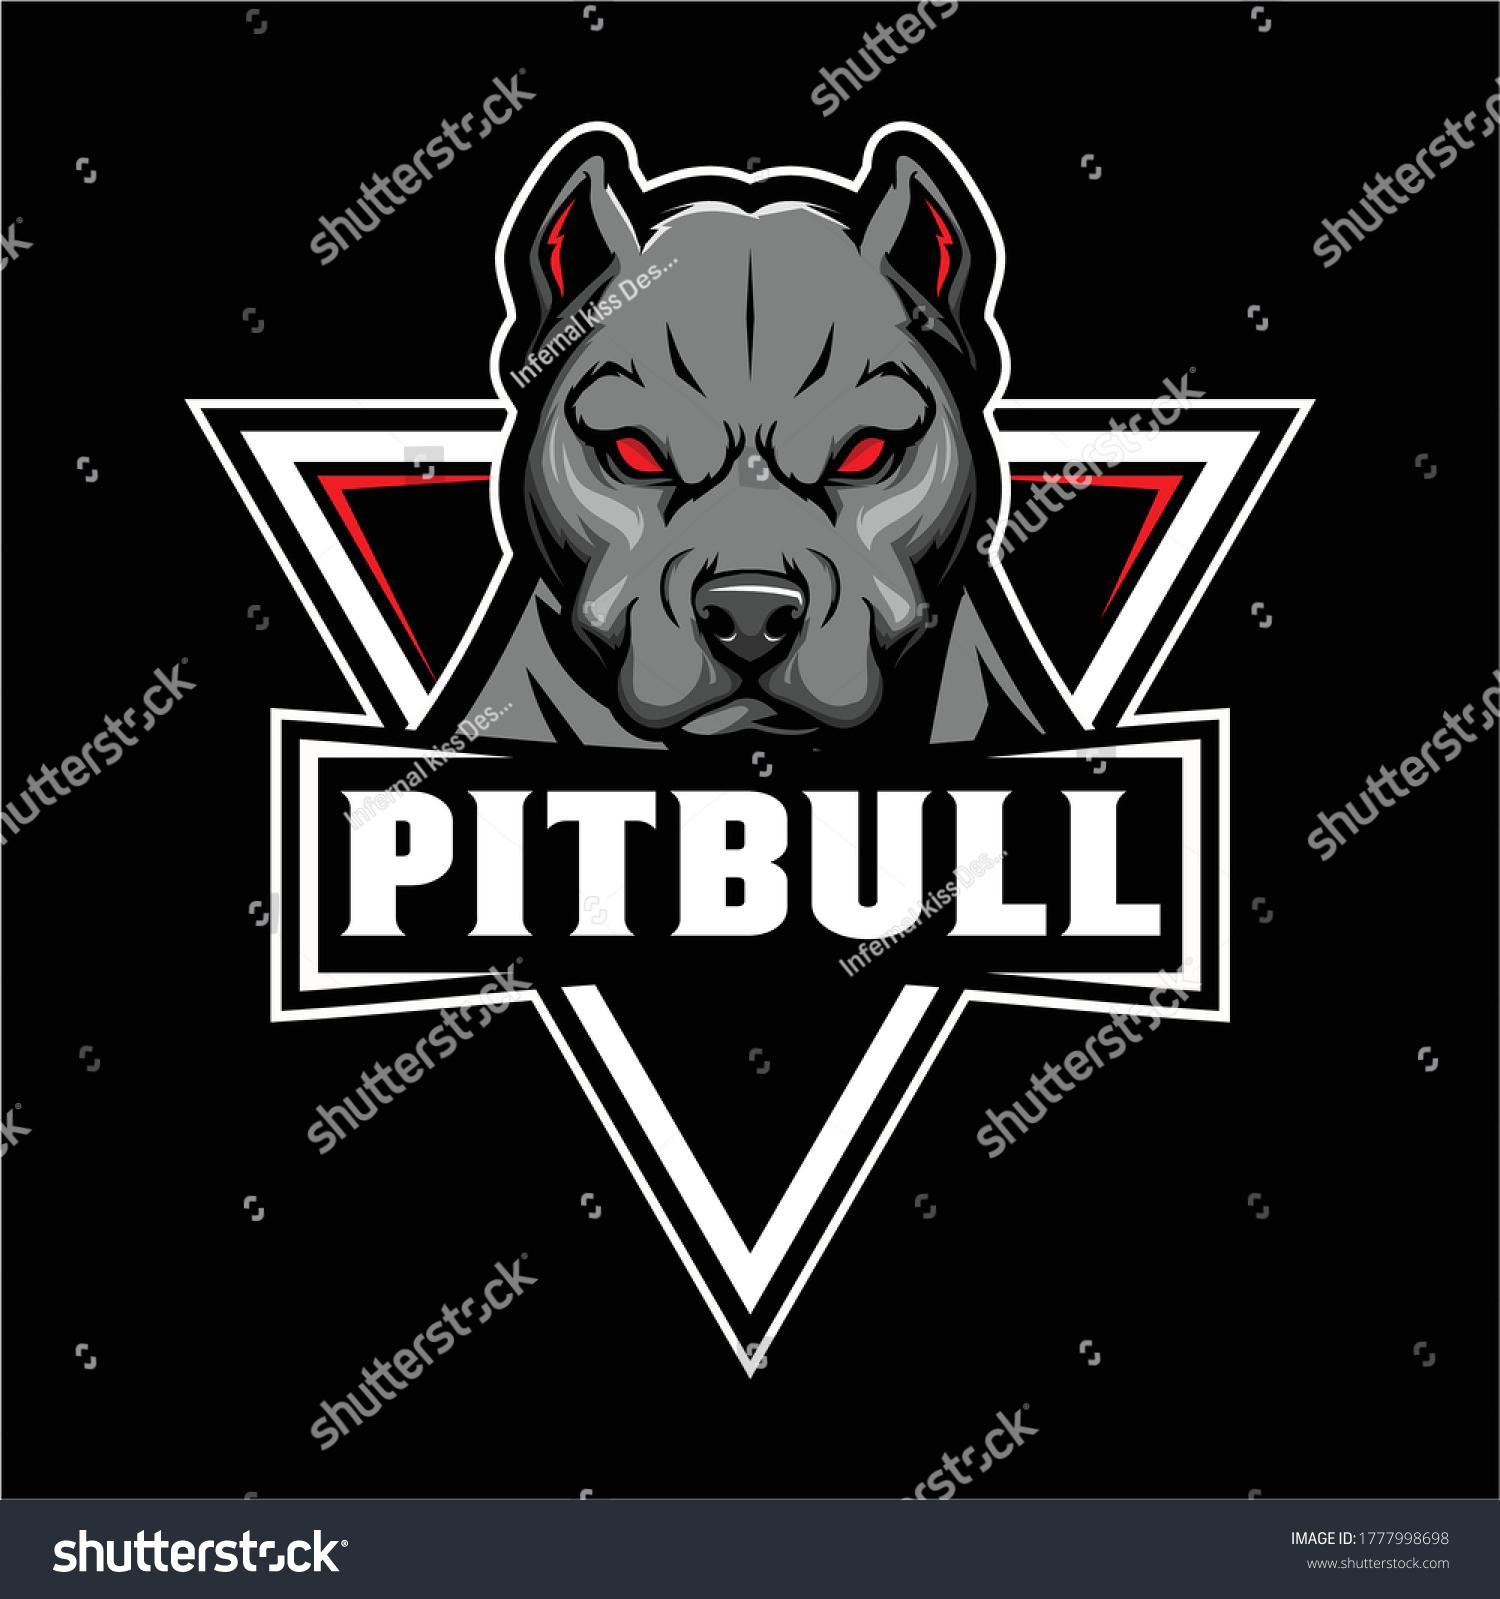 Pitbull Logo Image Stock Photos Vectors Shutterstock